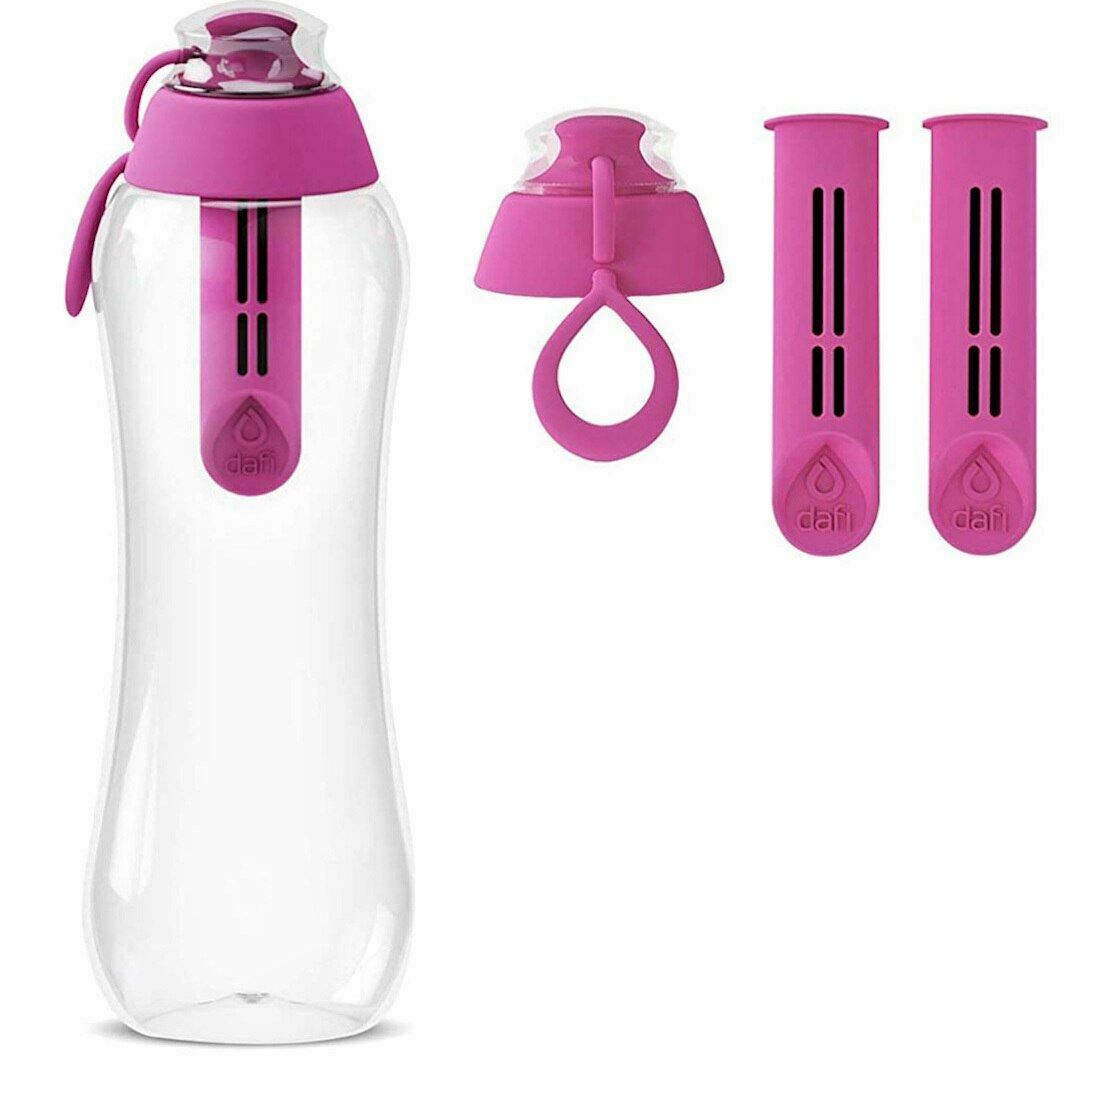 Dafi Filtering Water Bottle 24 fl oz + 2 Filters + New Bottle Cap Pink BPA-Free